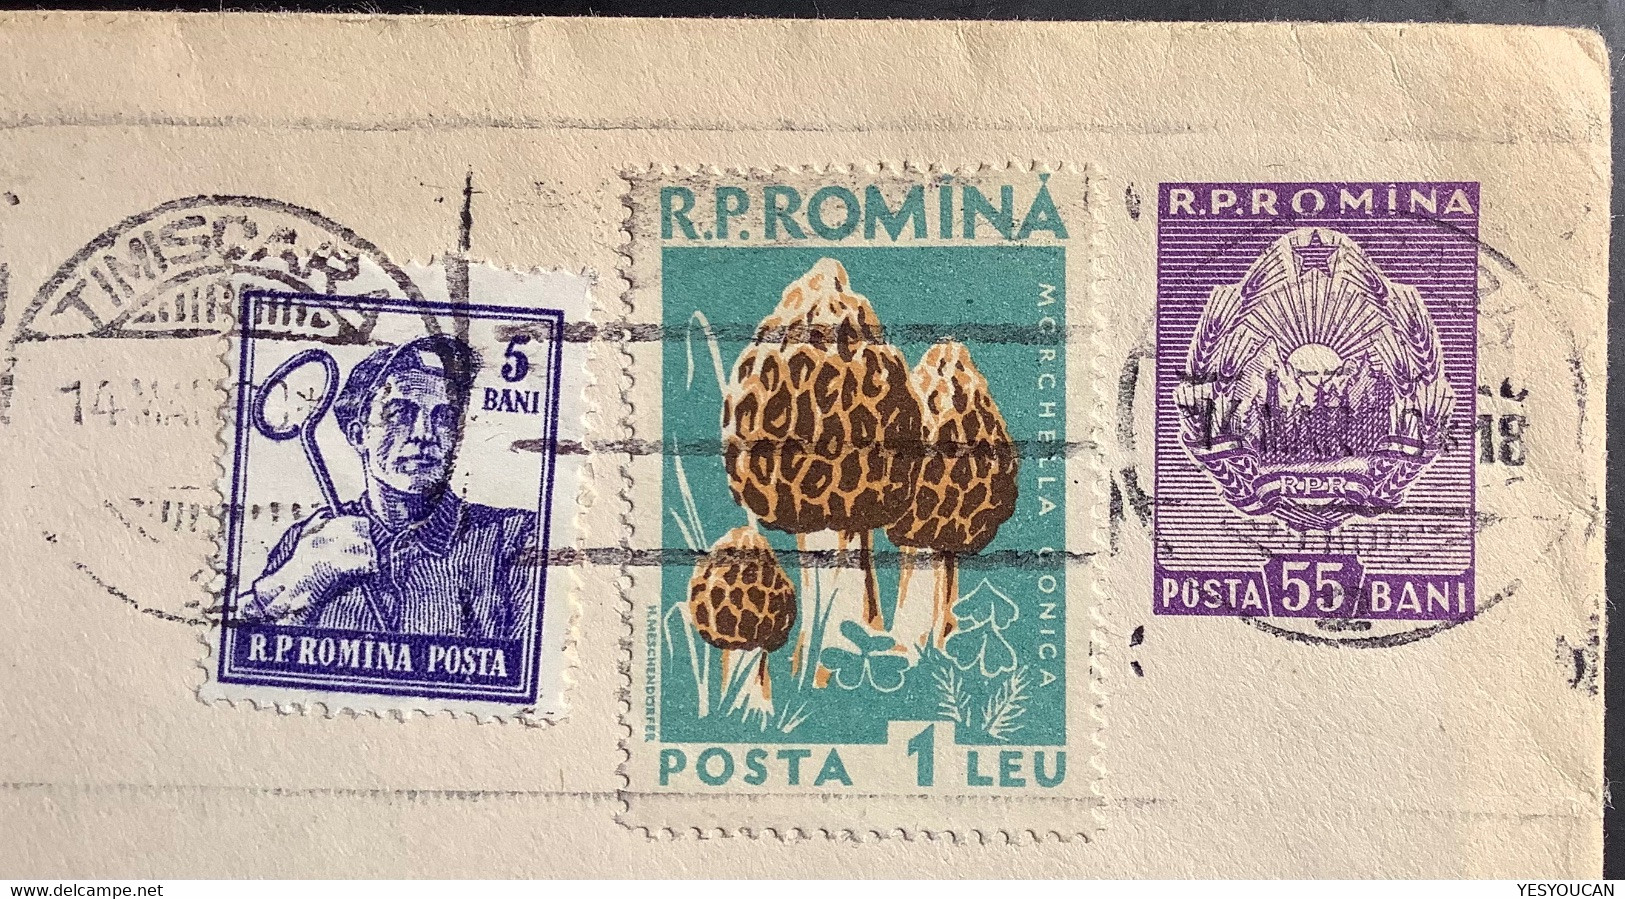 1960 Illustrated Postal Stationery: Plante Médicinale Medecine Plants Fleurs Flowers Mushroom Pilze (Romania Roumanie - Postwaardestukken